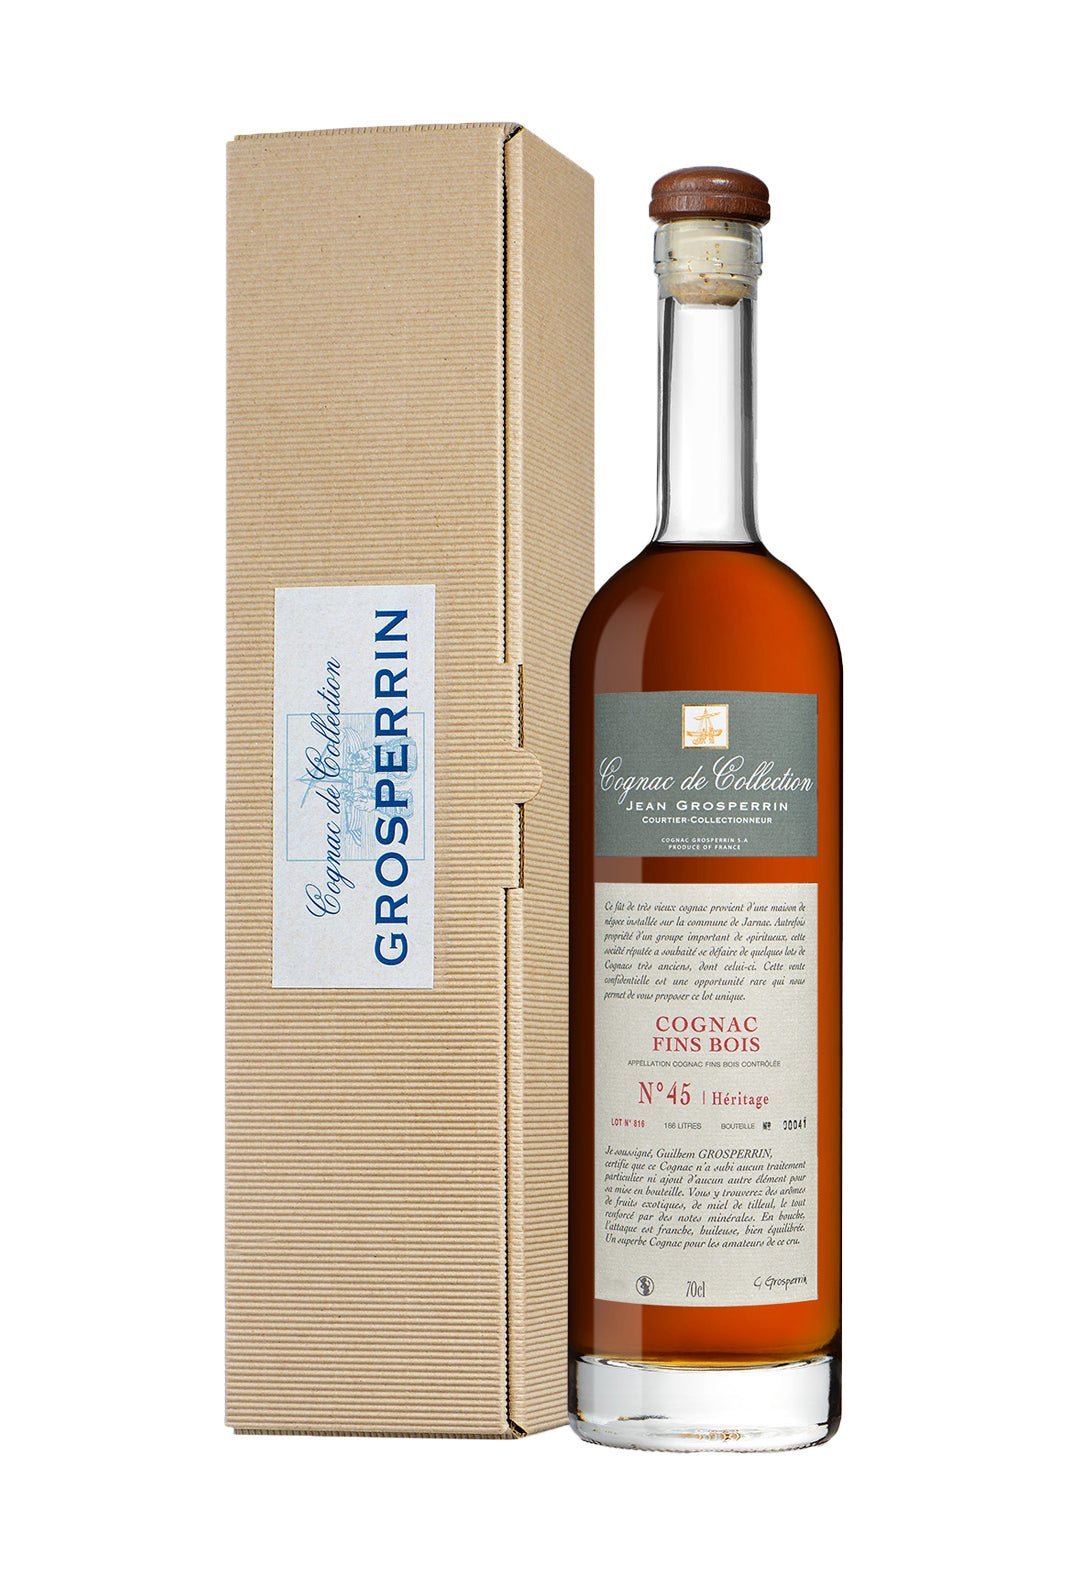 Grosperrin Cognac No.45 Fins Bois 52.1% 700ml | Brandy | Shop online at Spirits of France